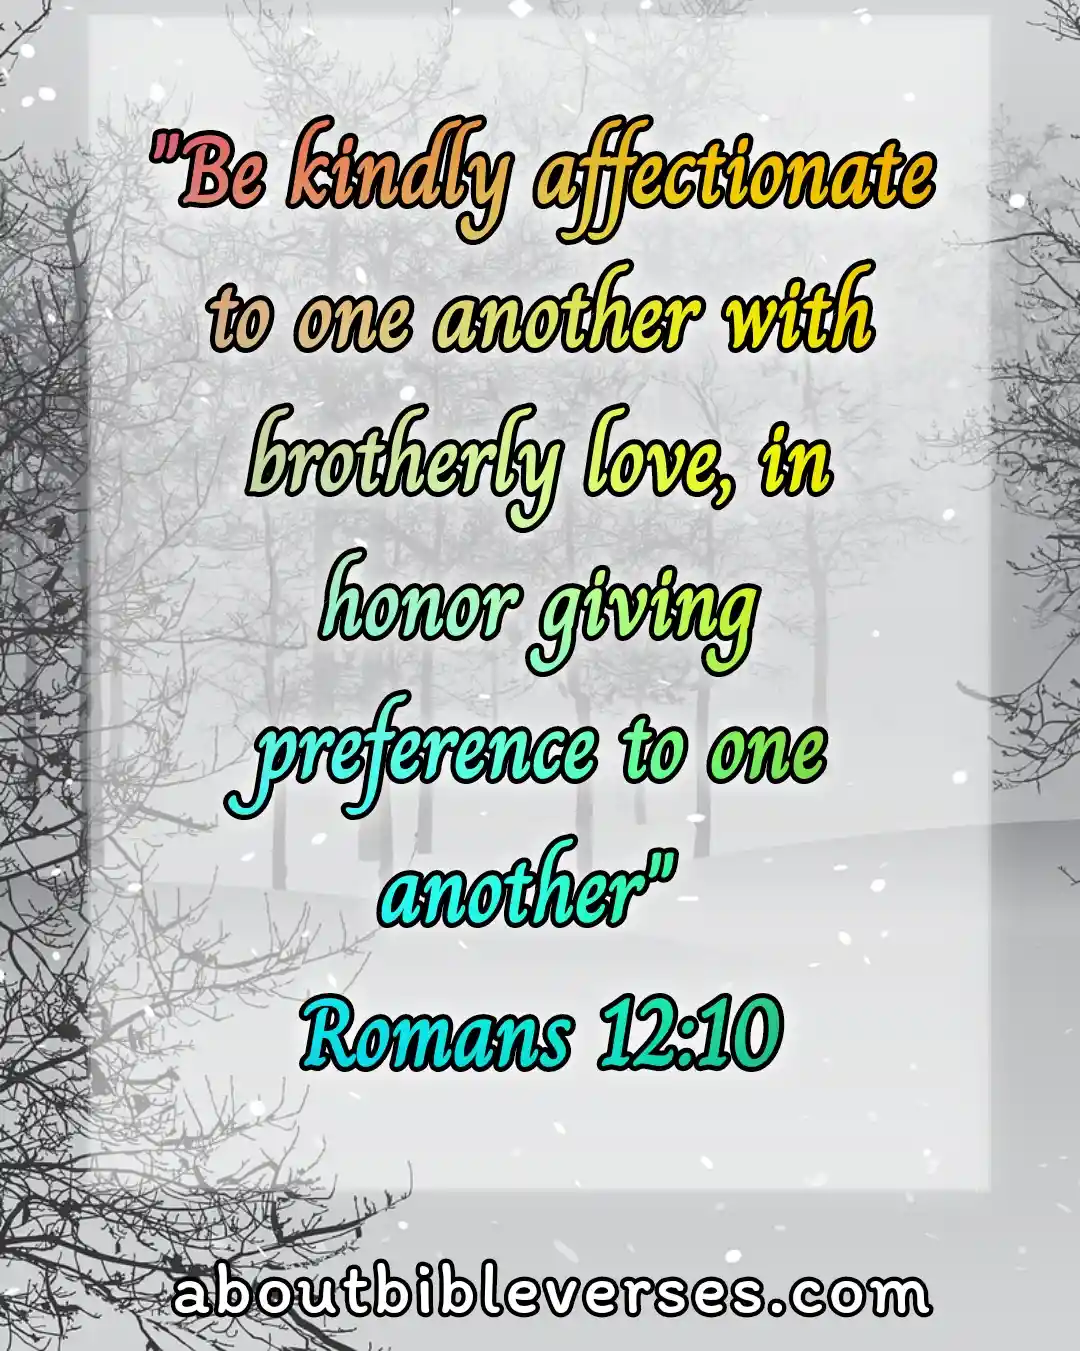 bible verses about family (Romans 12:10)